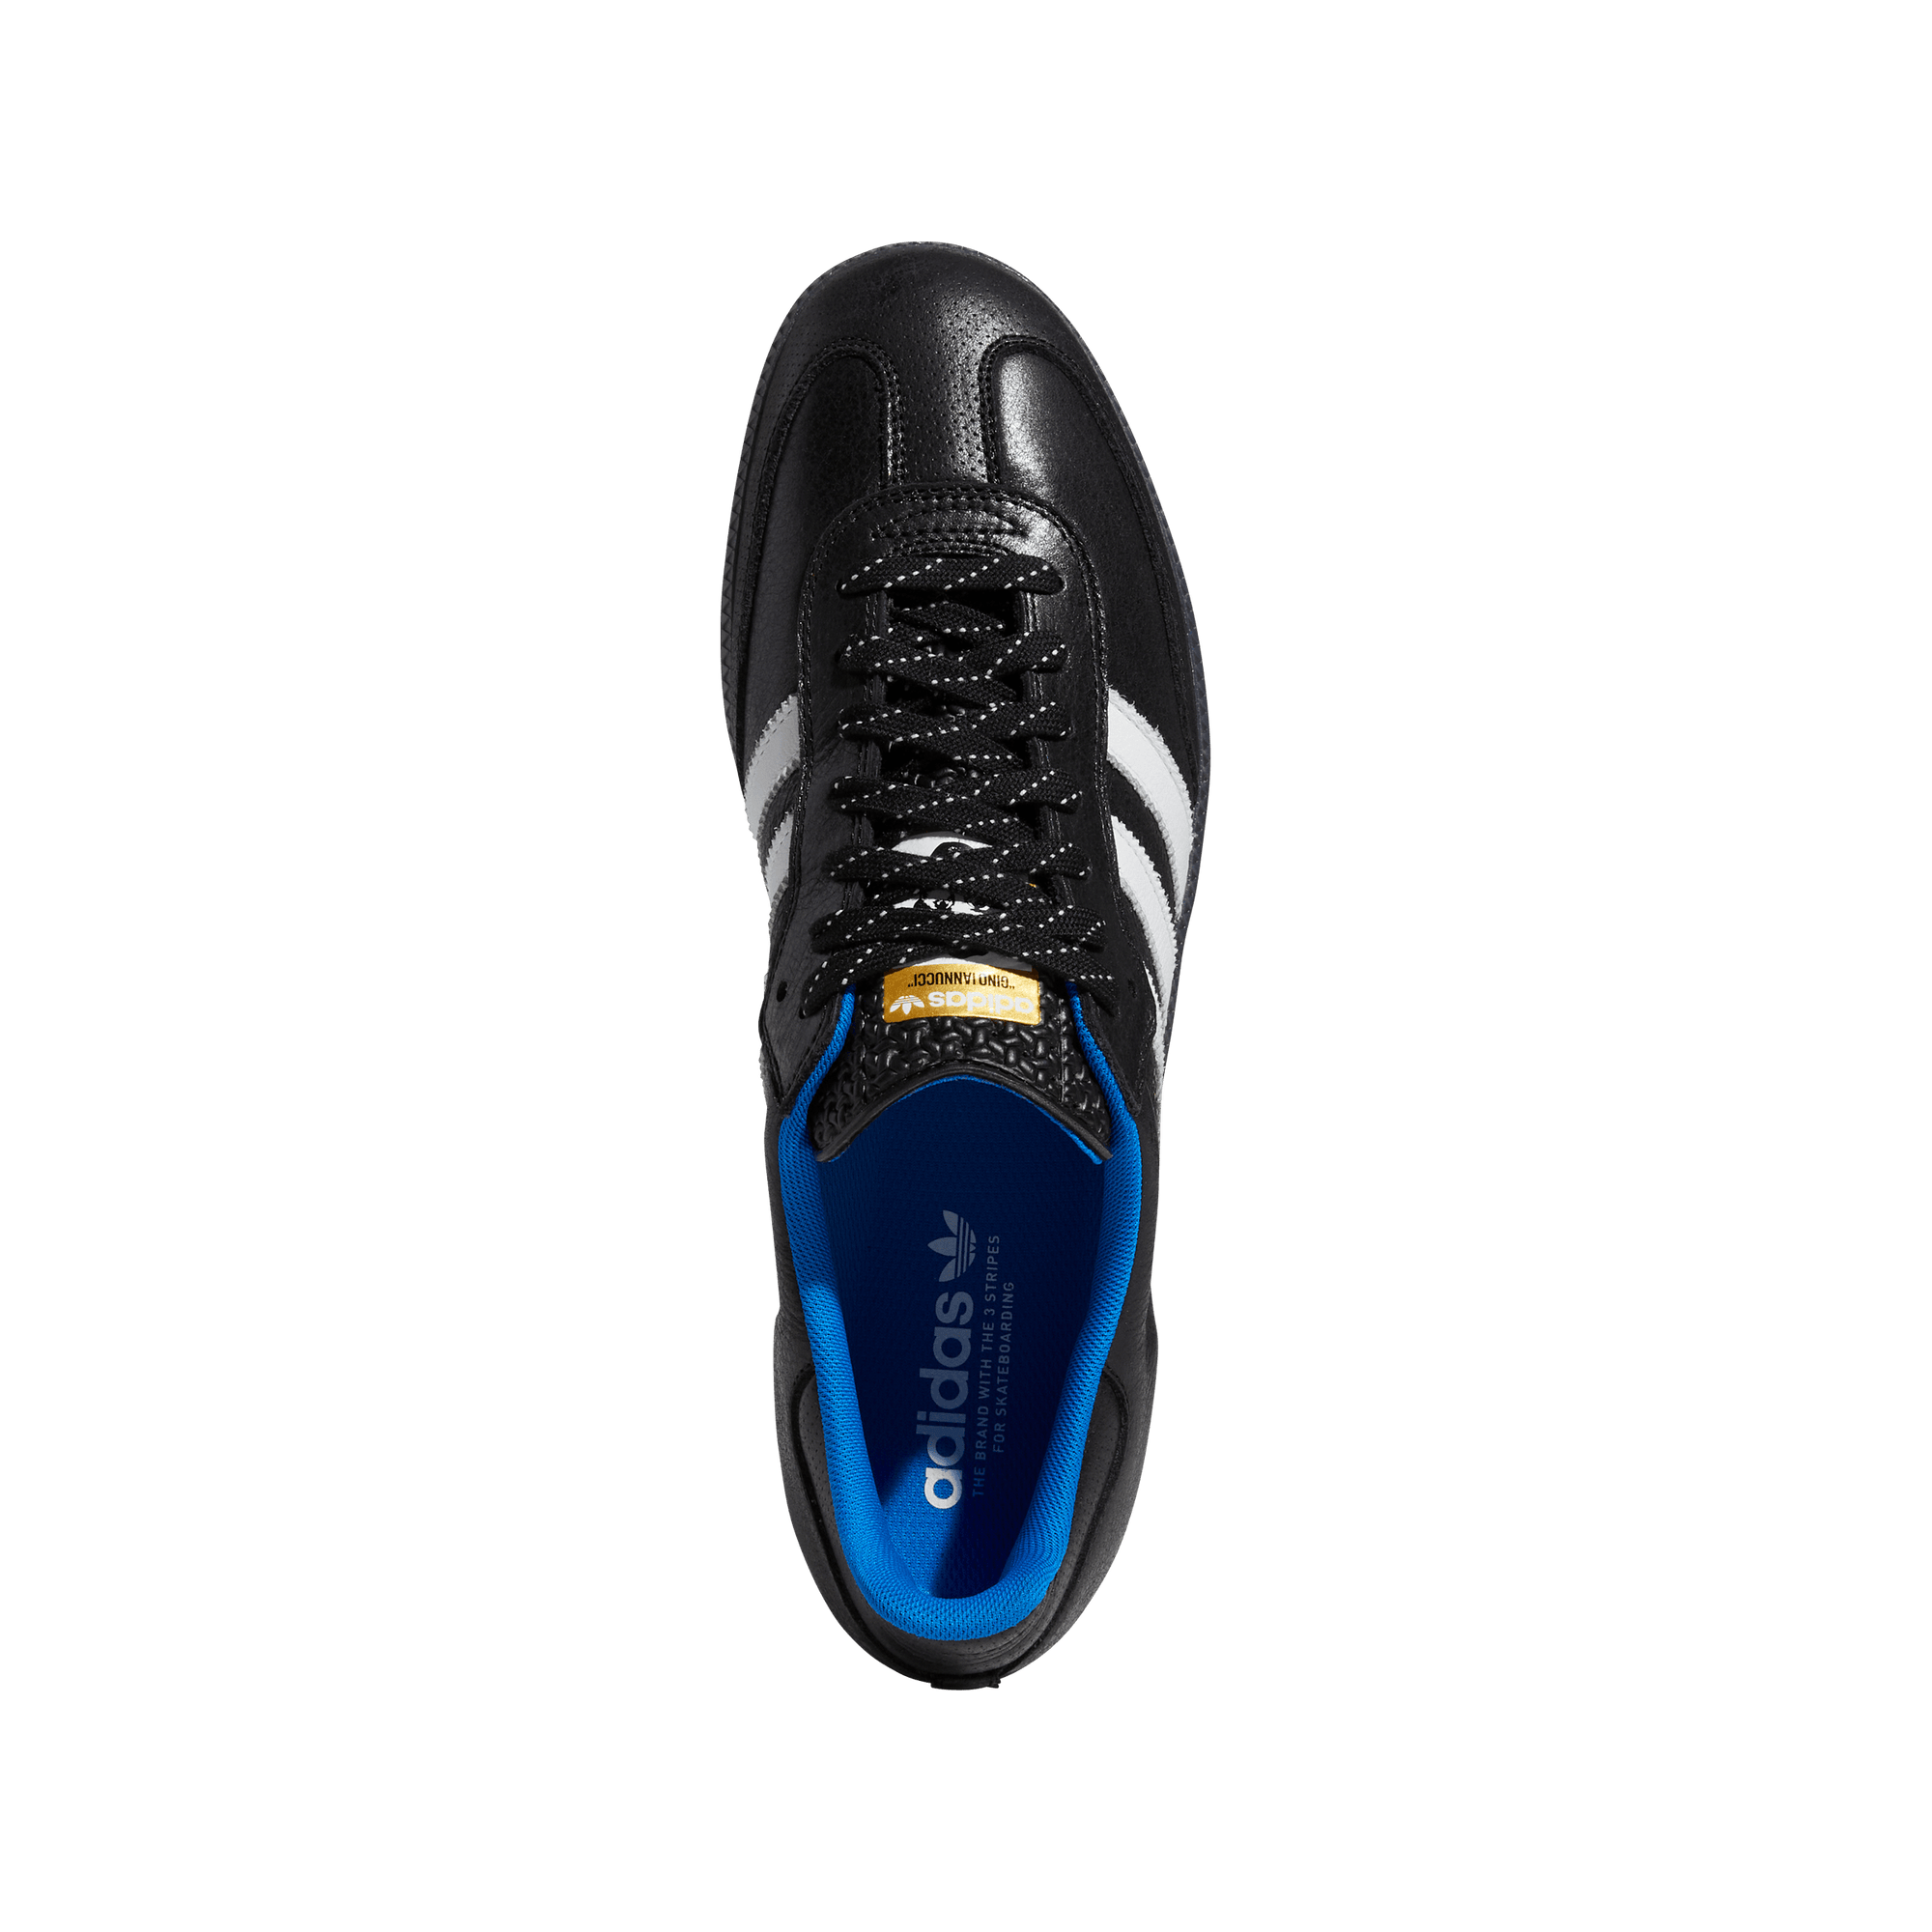 ADIDAS Samba ADV RYR Shoes Core Black/Cloud White/Blue Bird Men's Skate Shoes Adidas 